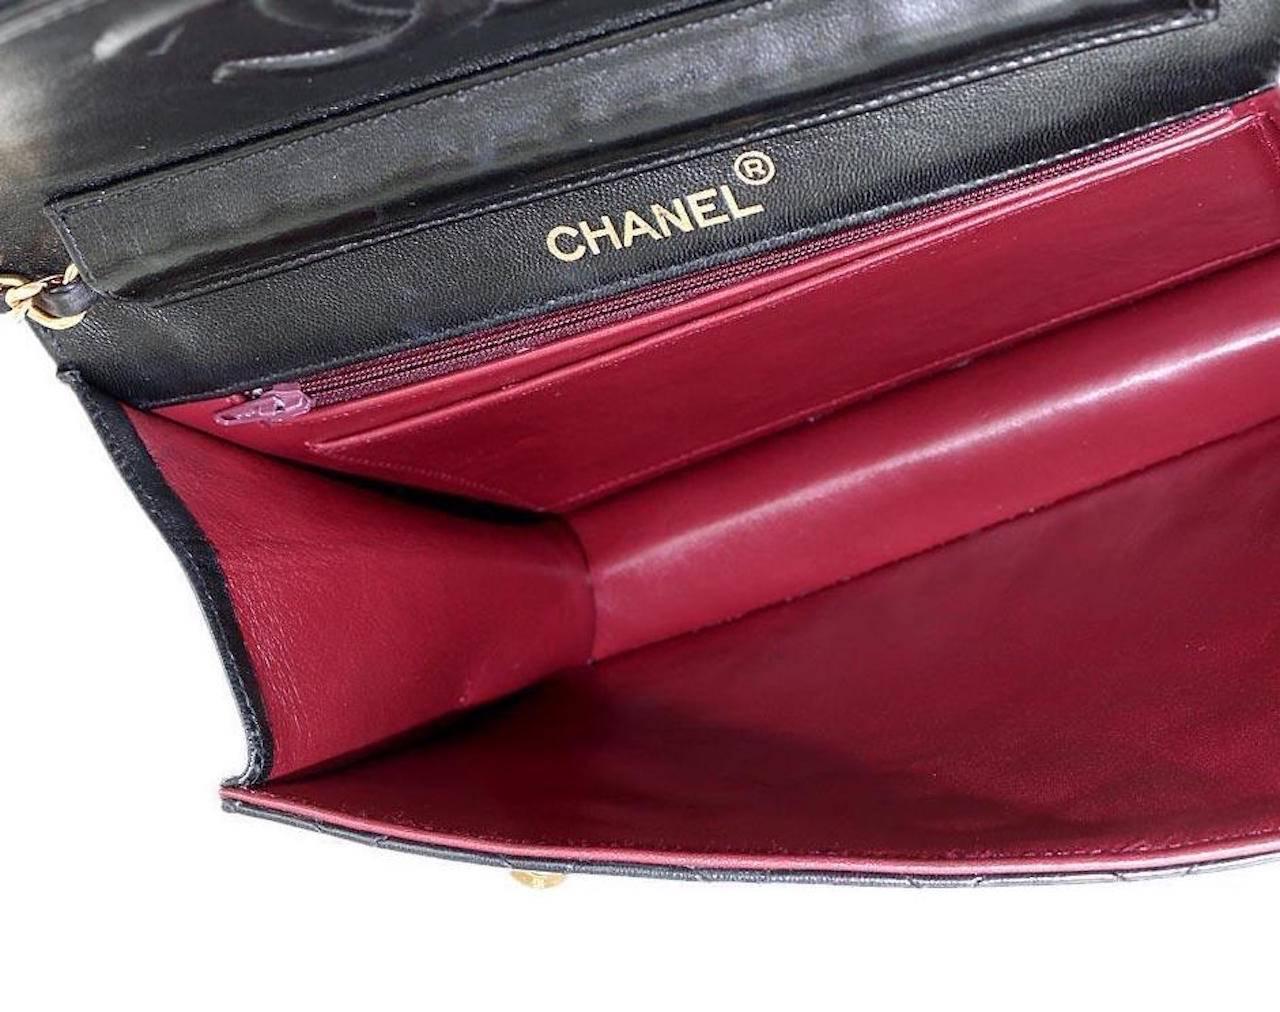 Chanel Rare Black Lambskin Dual Turnlock Clutch Satchel Crossbody Shoulder Bag 2